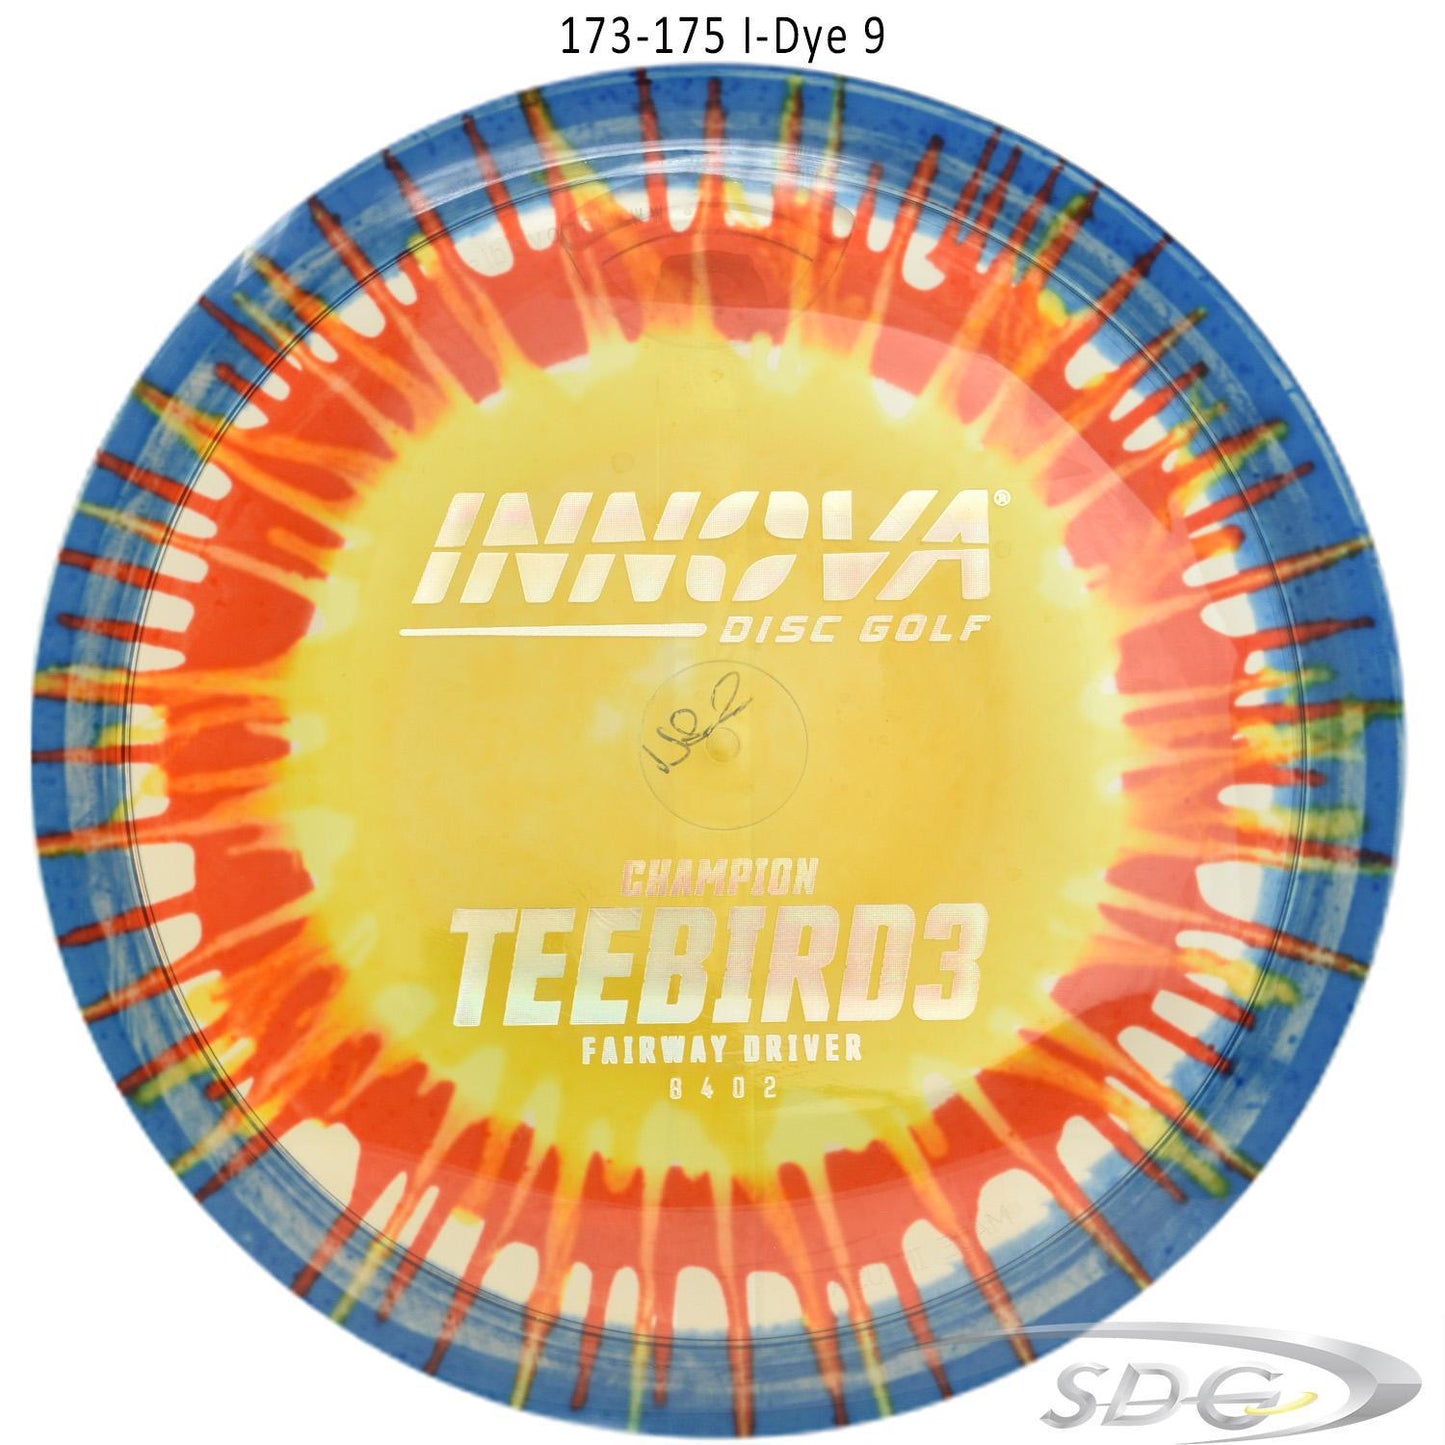 innova-champion-teebird3-i-dye-disc-golf-fairway-driver 173-175 I-Dye 9 